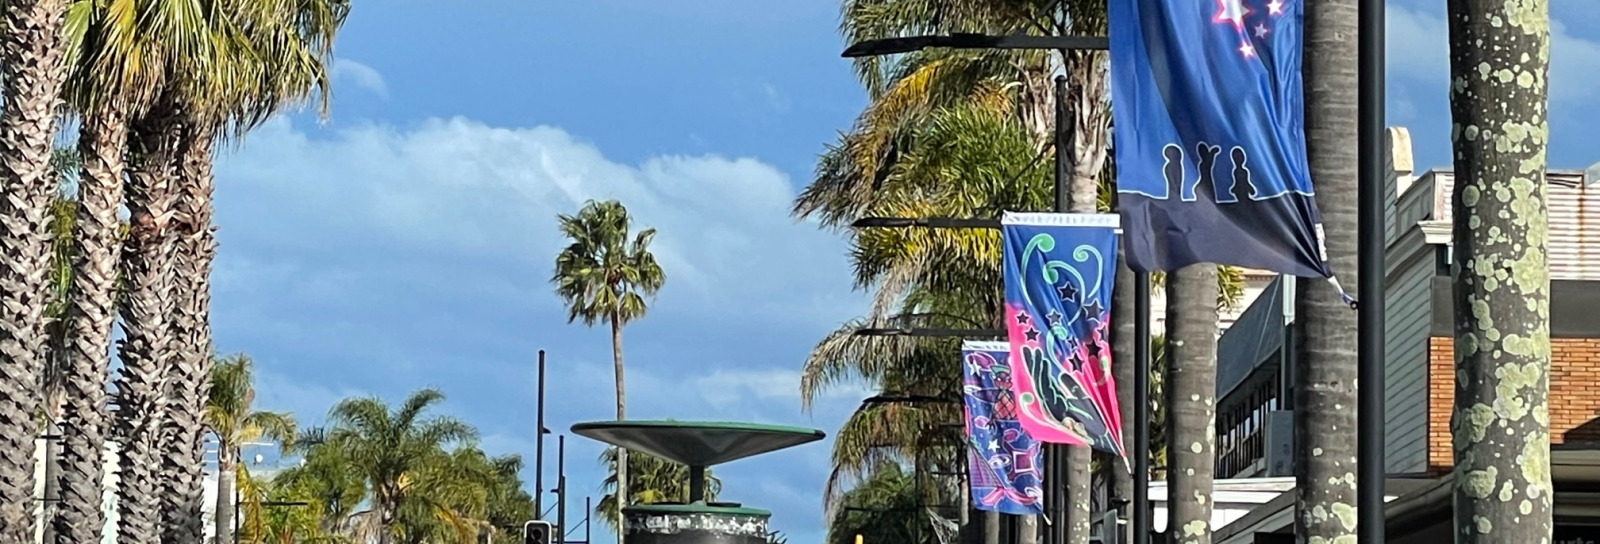 Matariki flags banner image